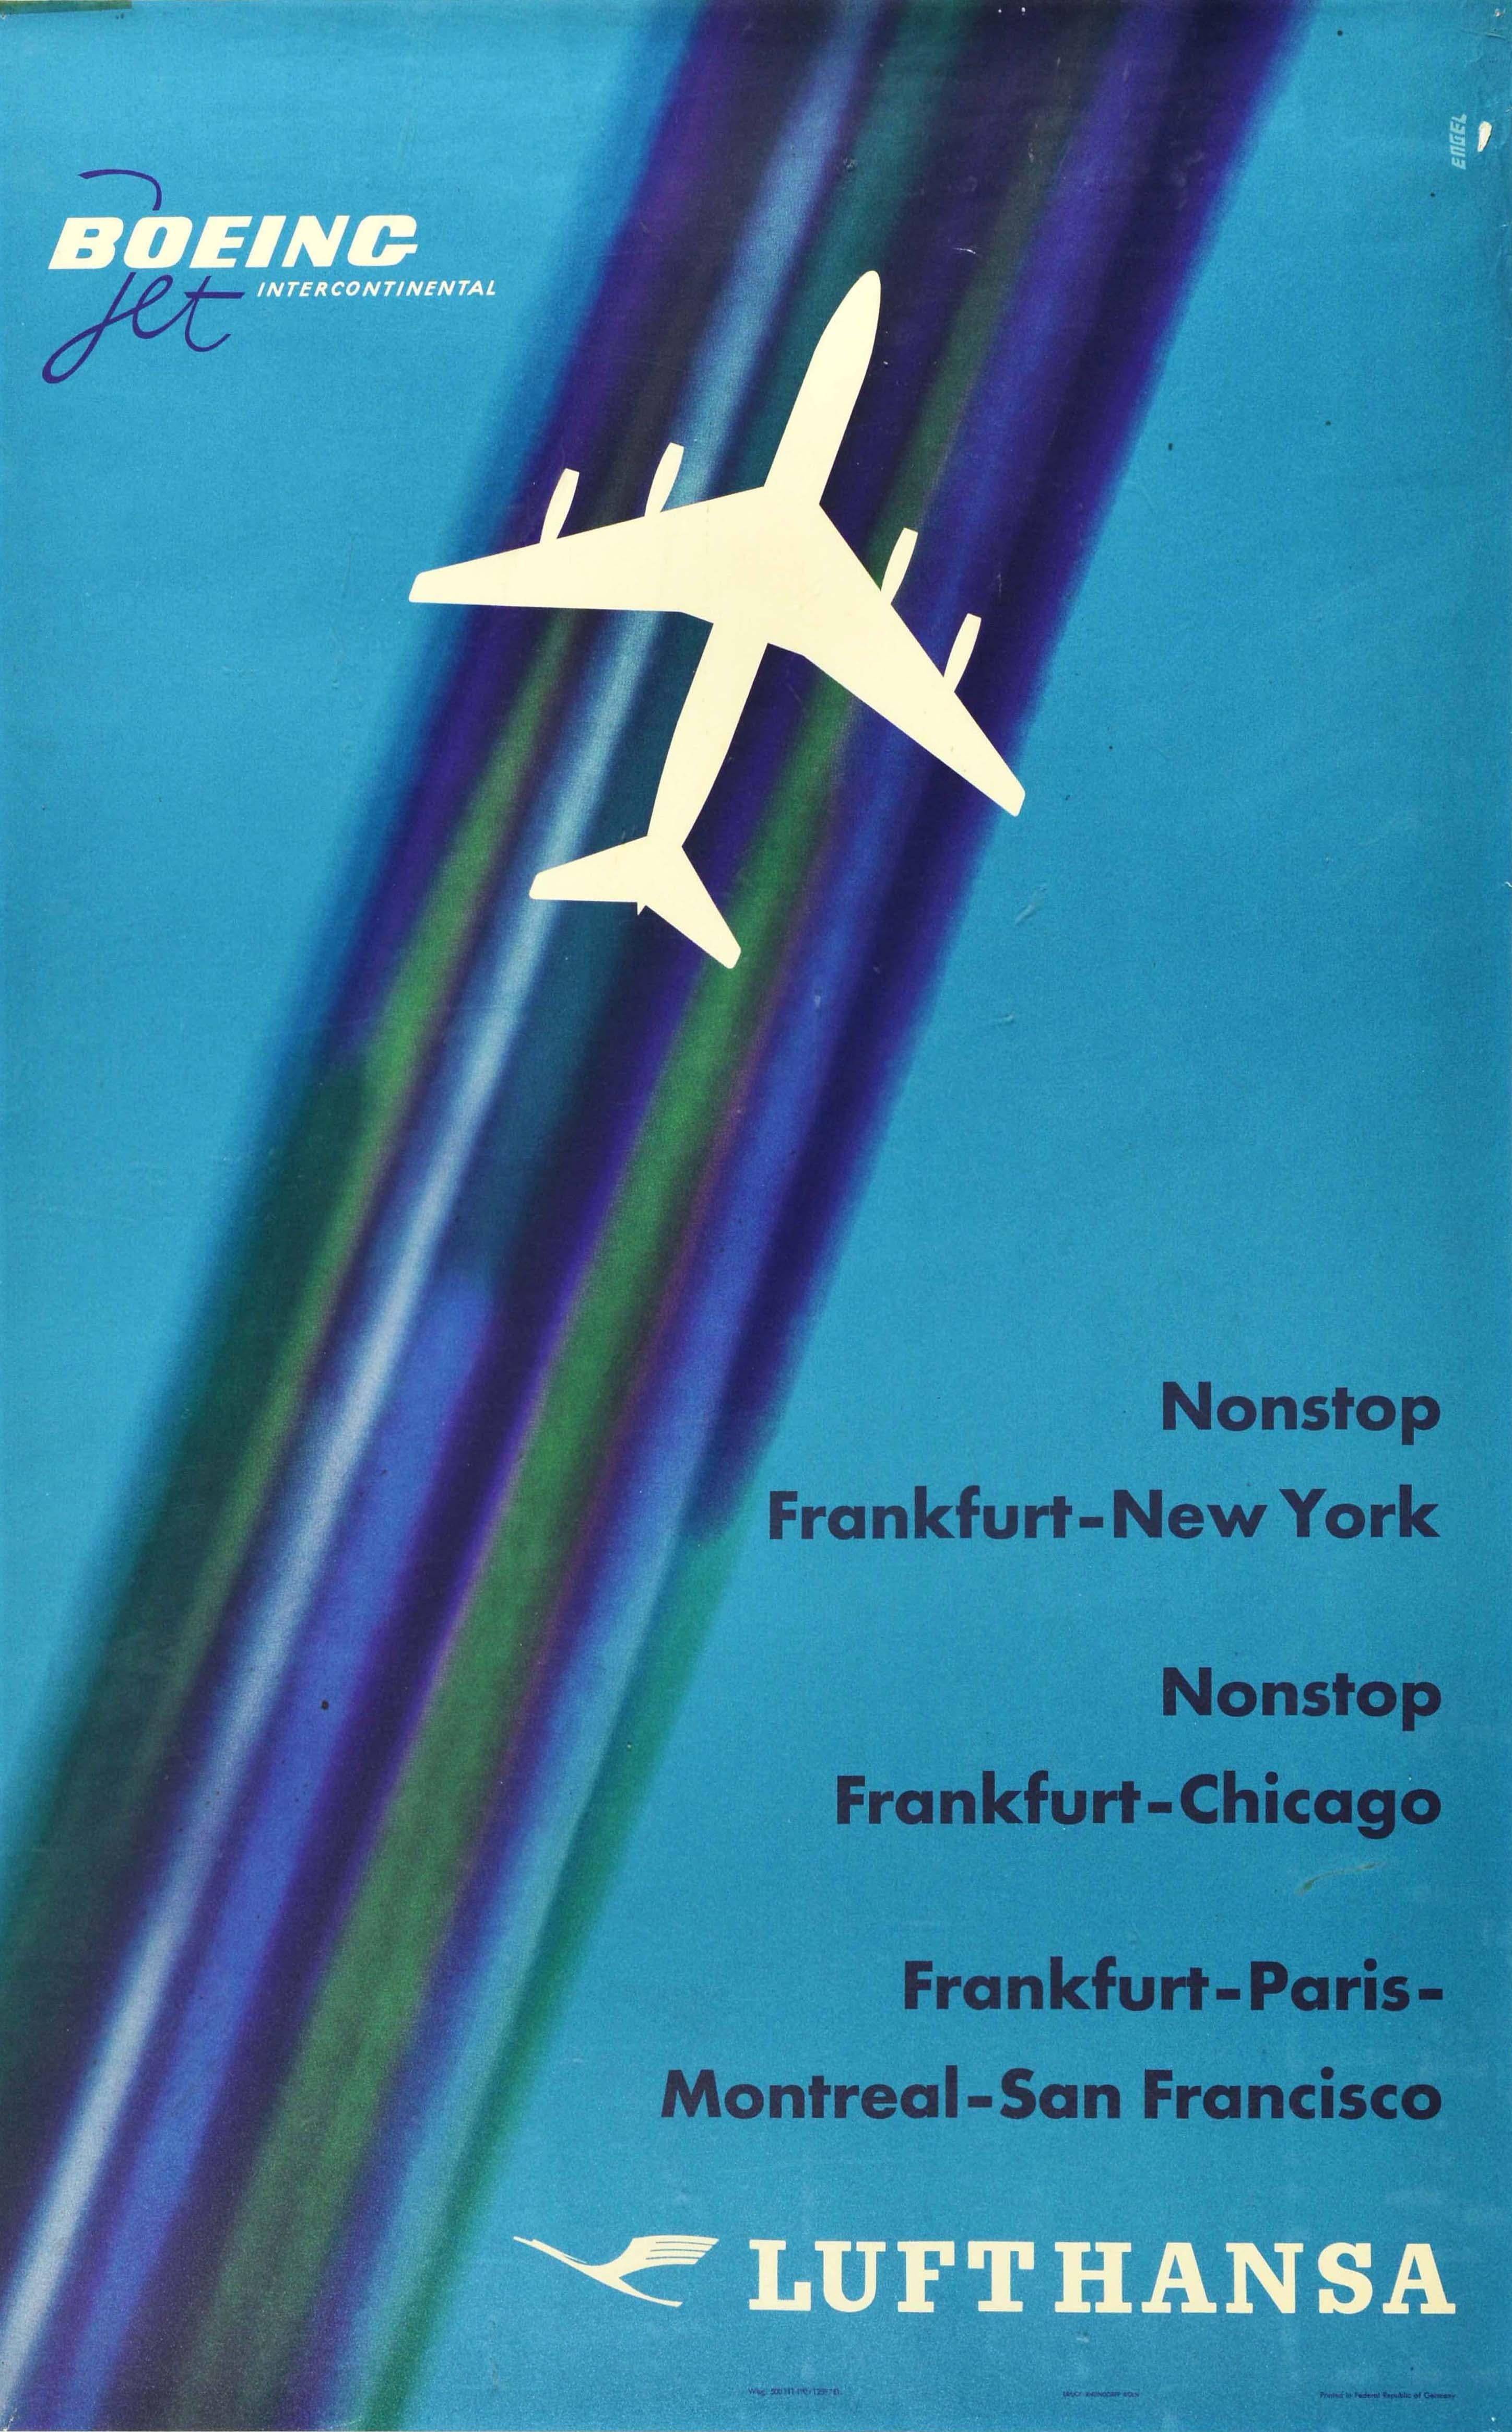 Engel Print - Original Vintage Poster Lufthansa Boeing Jet Nonstop Frankfurt New York Chicago